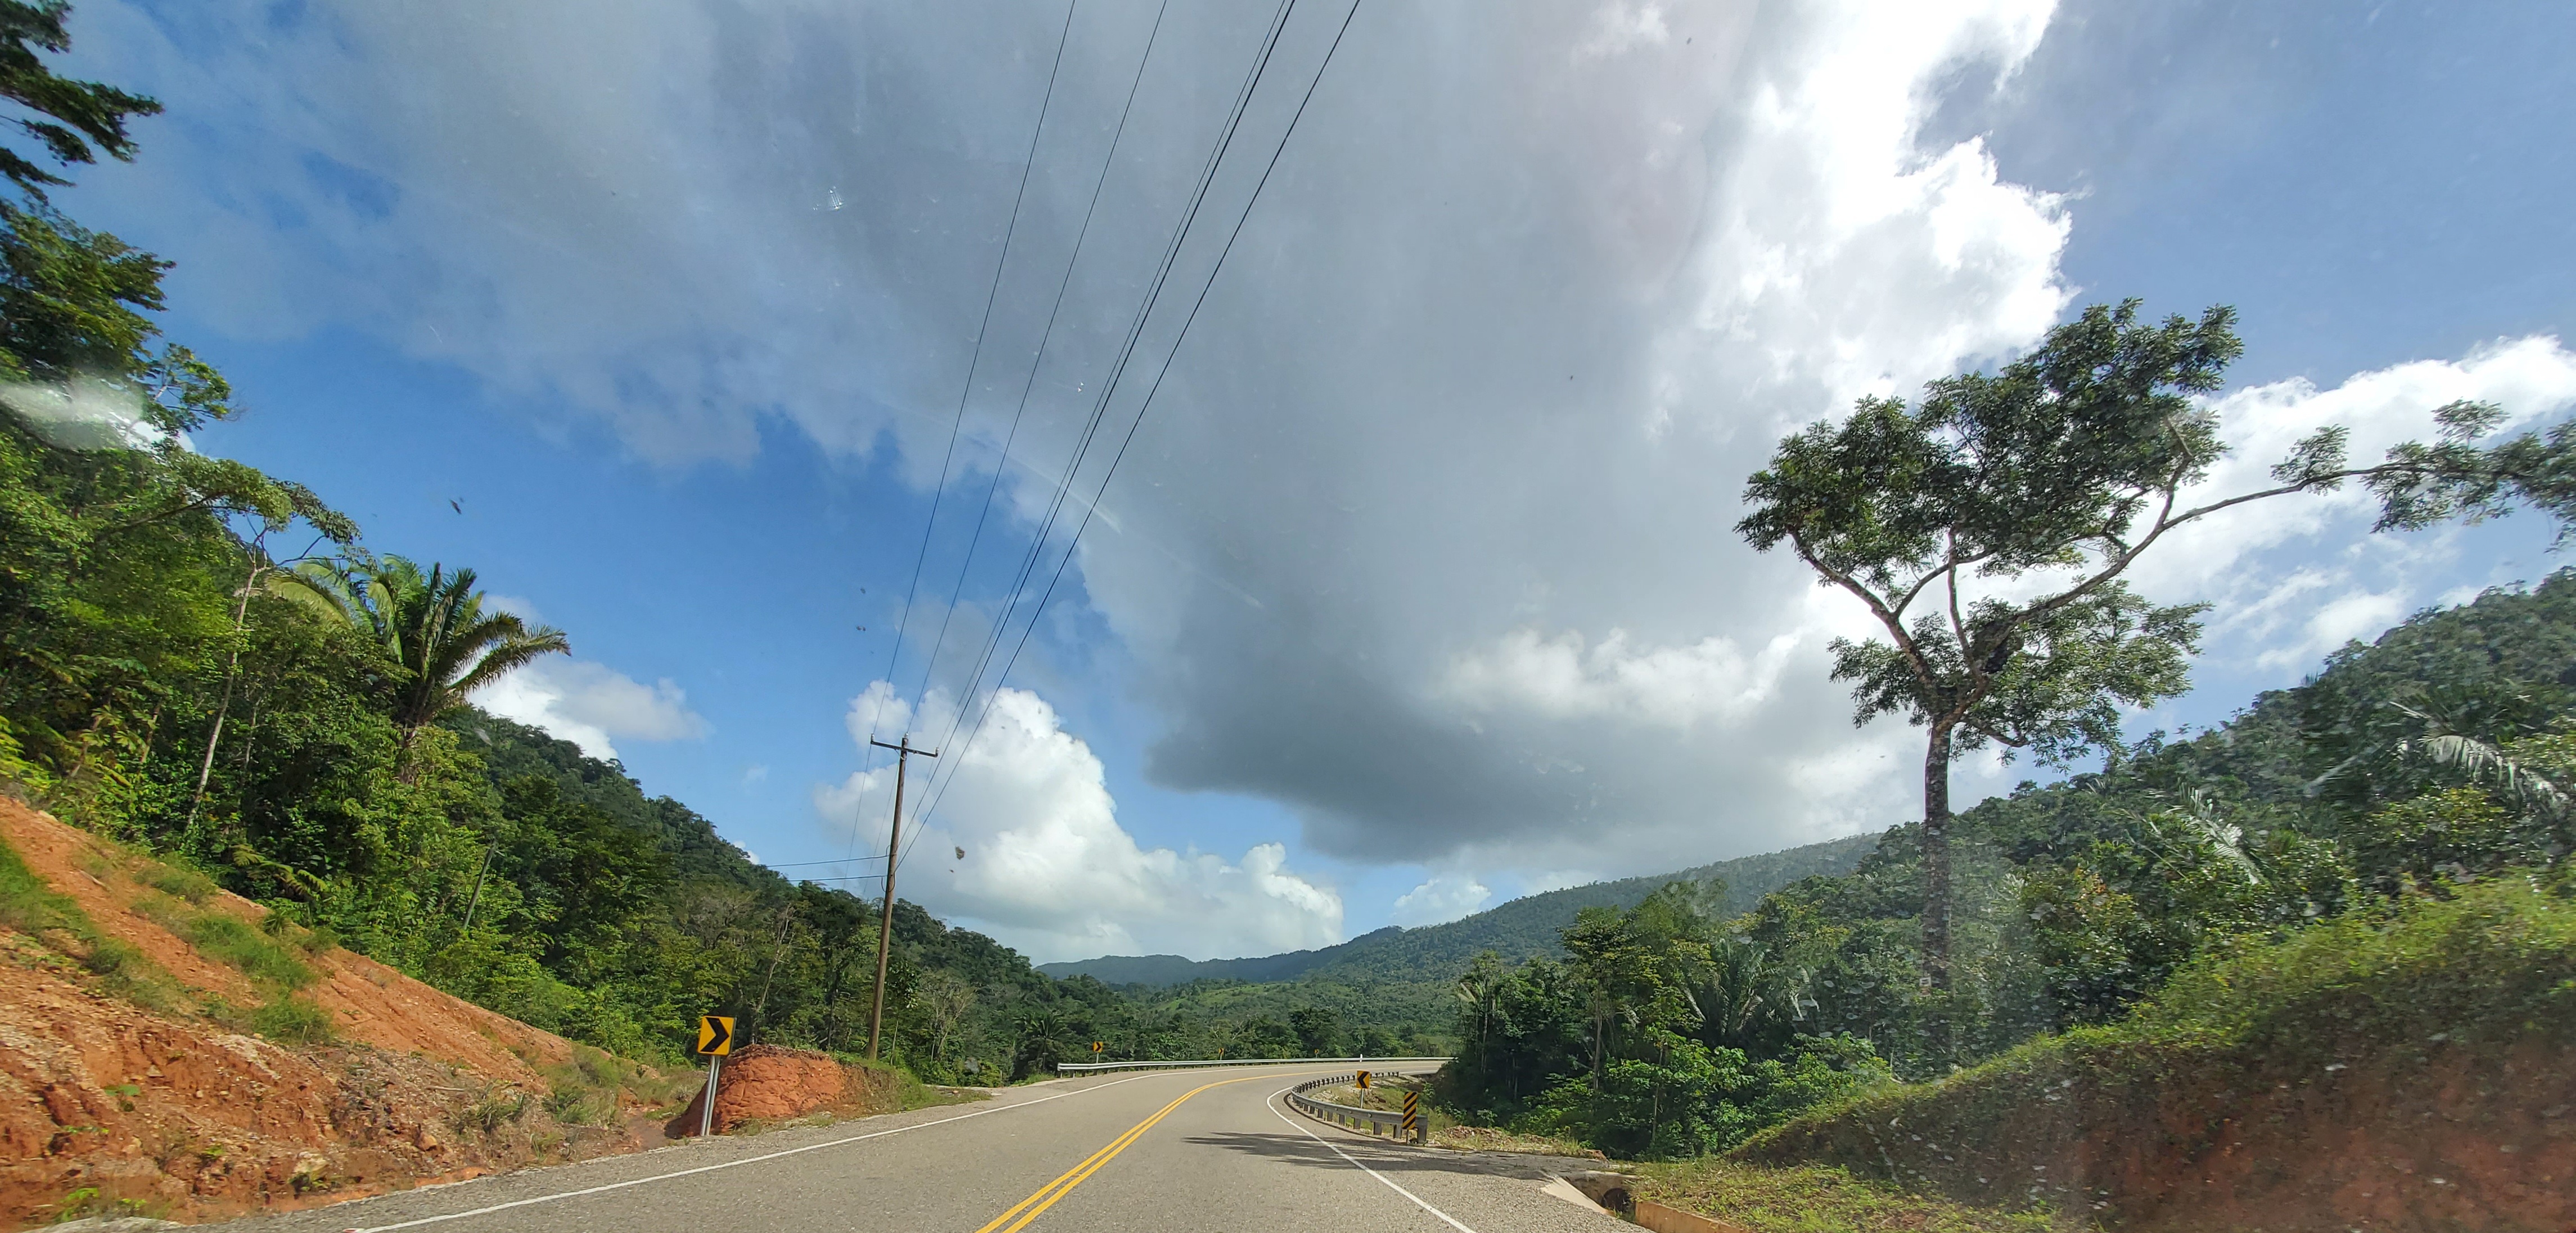 hummingbird highway, Belize, Cayo, The west is the best